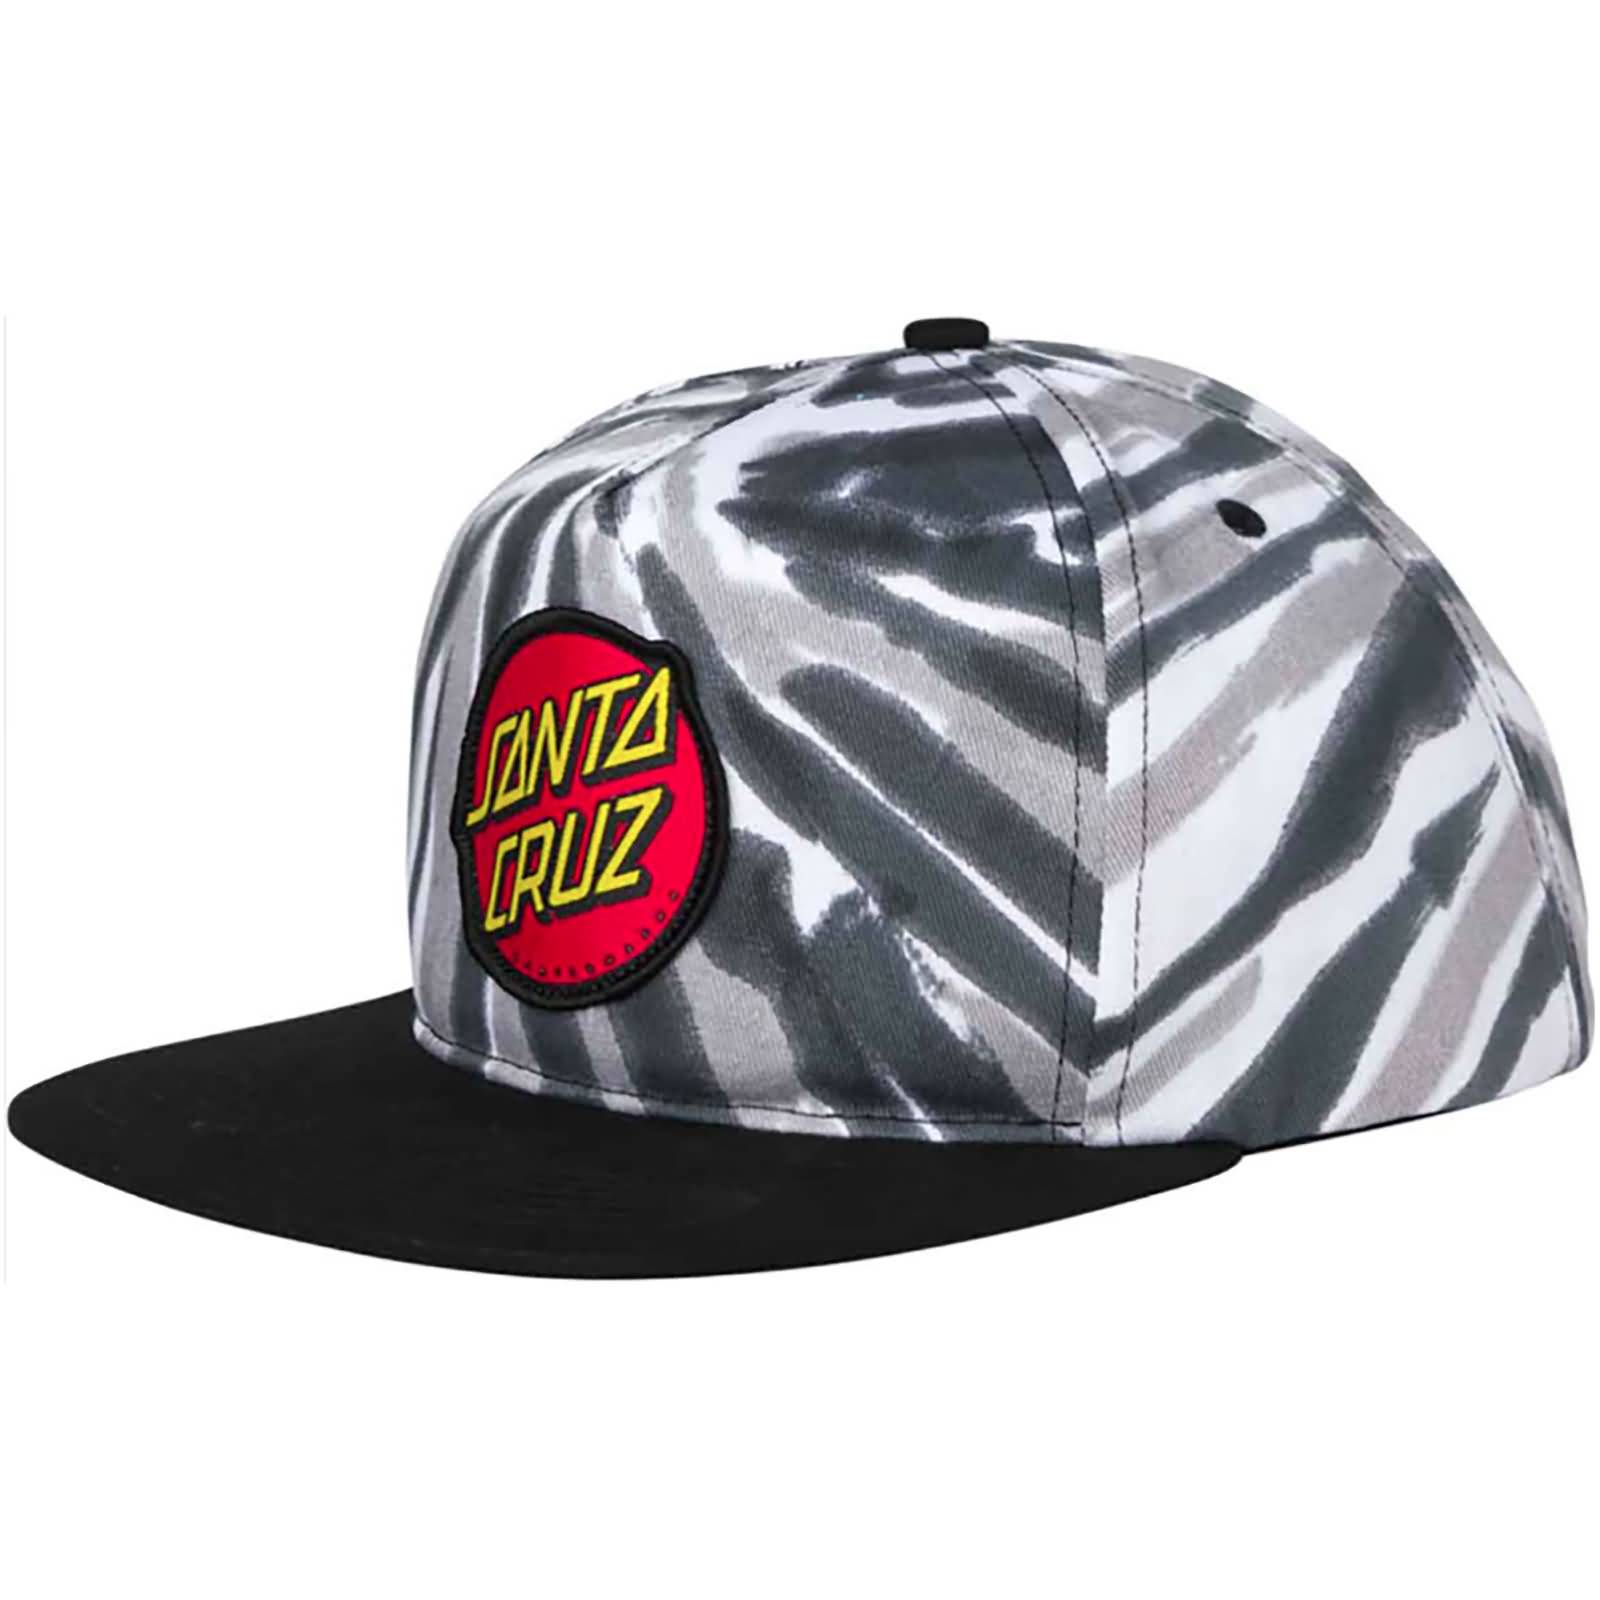 Santa Cruz Twist Men's Snapback Adjustable Hats (Brand New